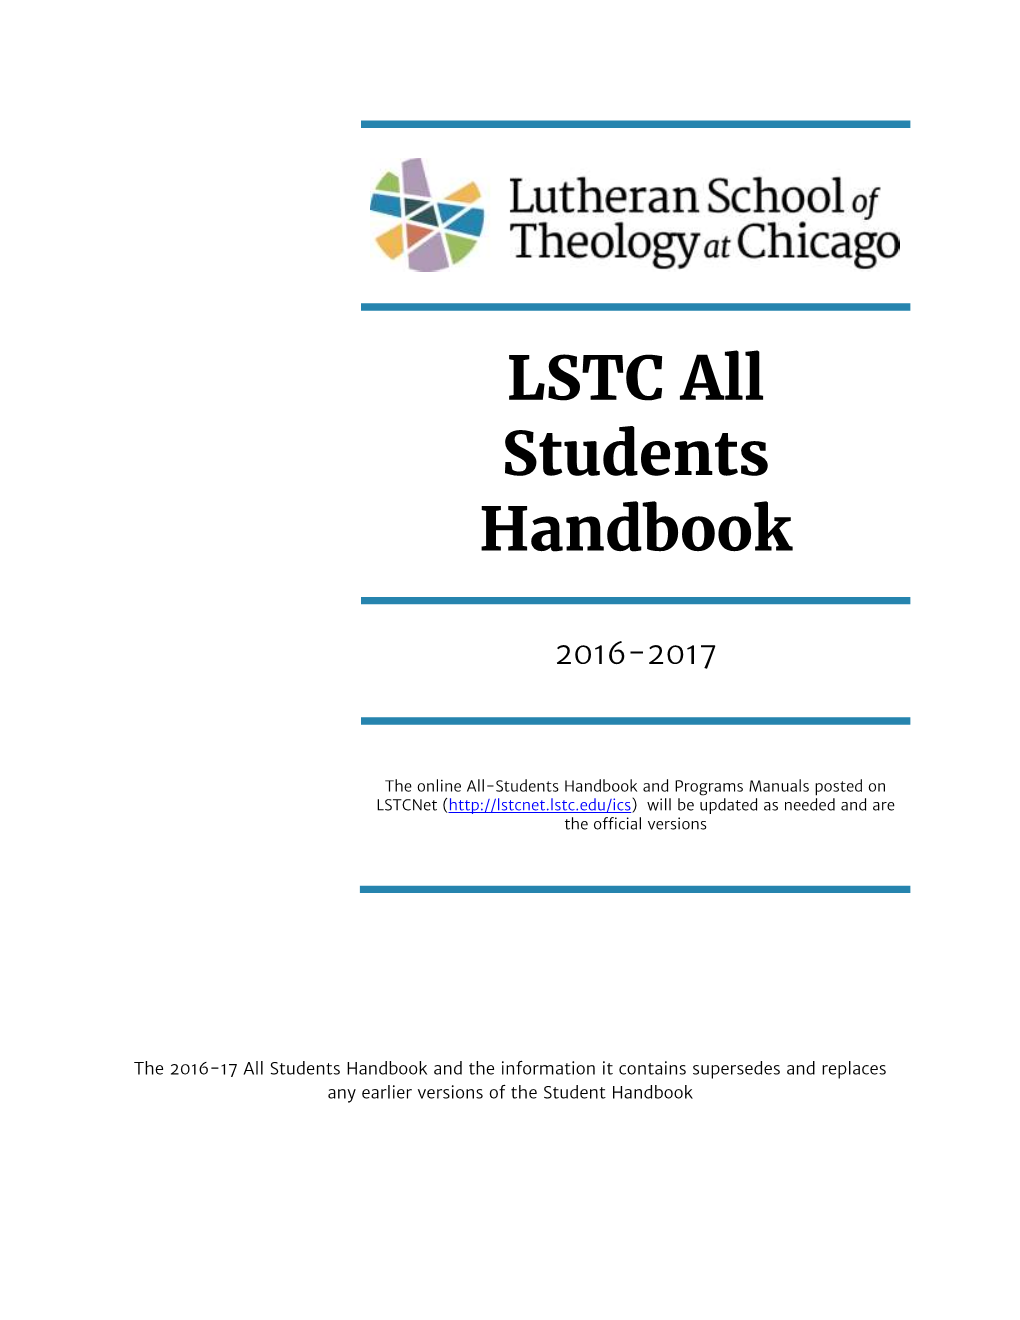 LSTC All Students Handbook